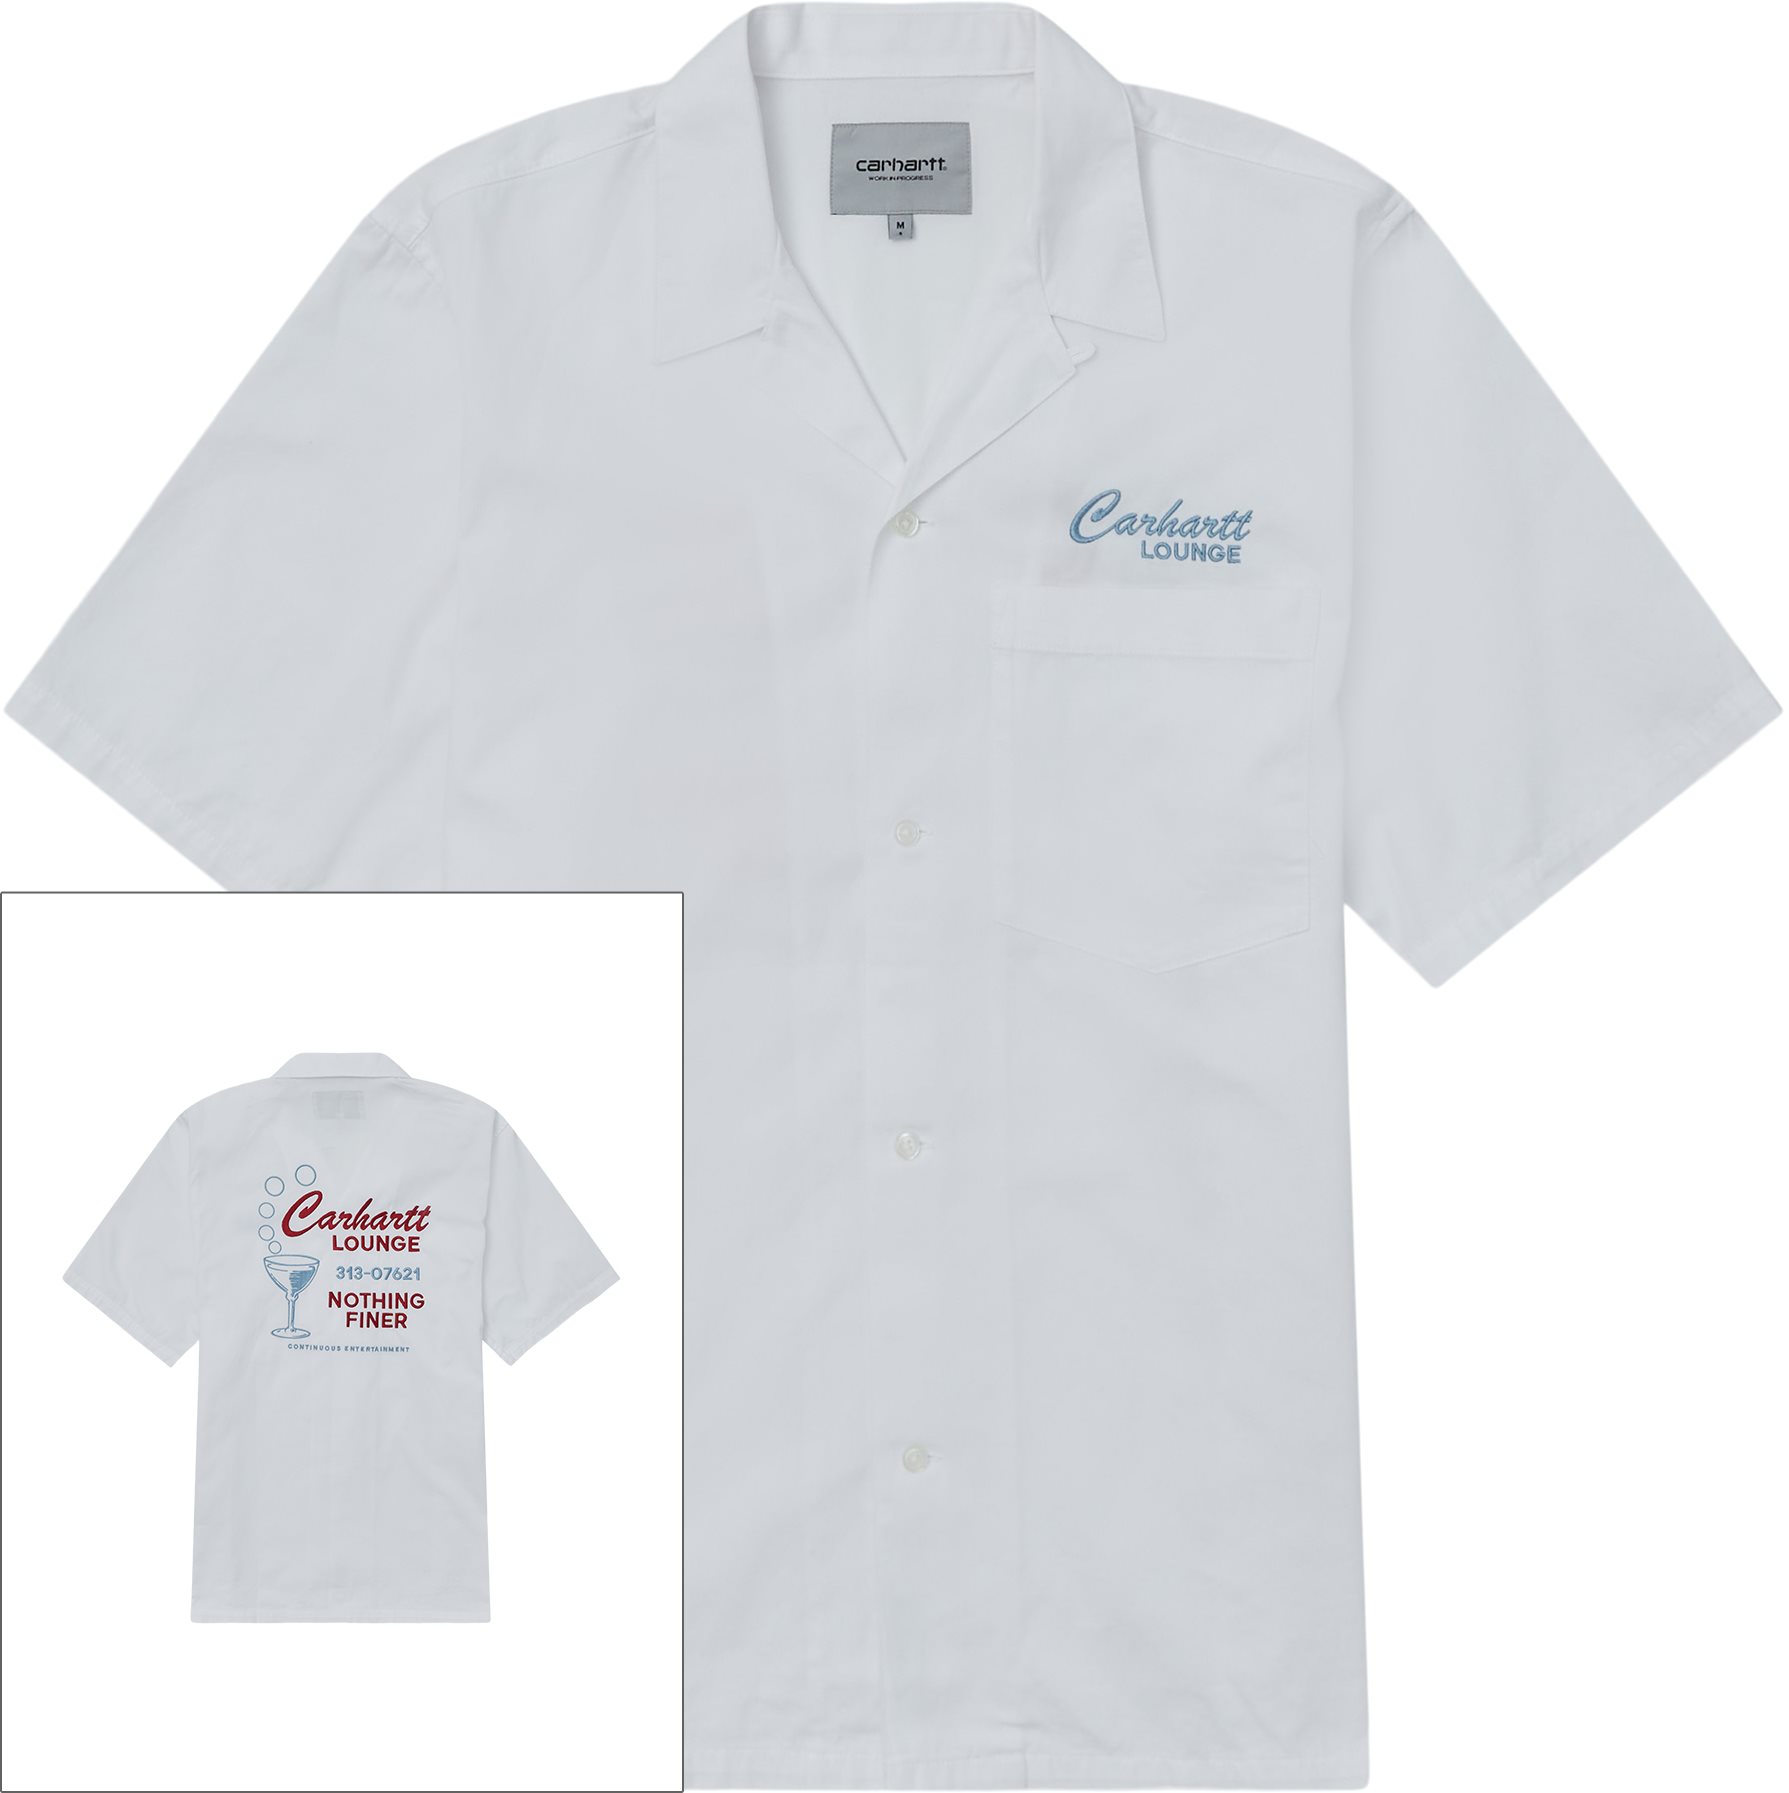 Carhartt Lounge K/æ Skjorte I030046 - Shirts - Loose fit - White